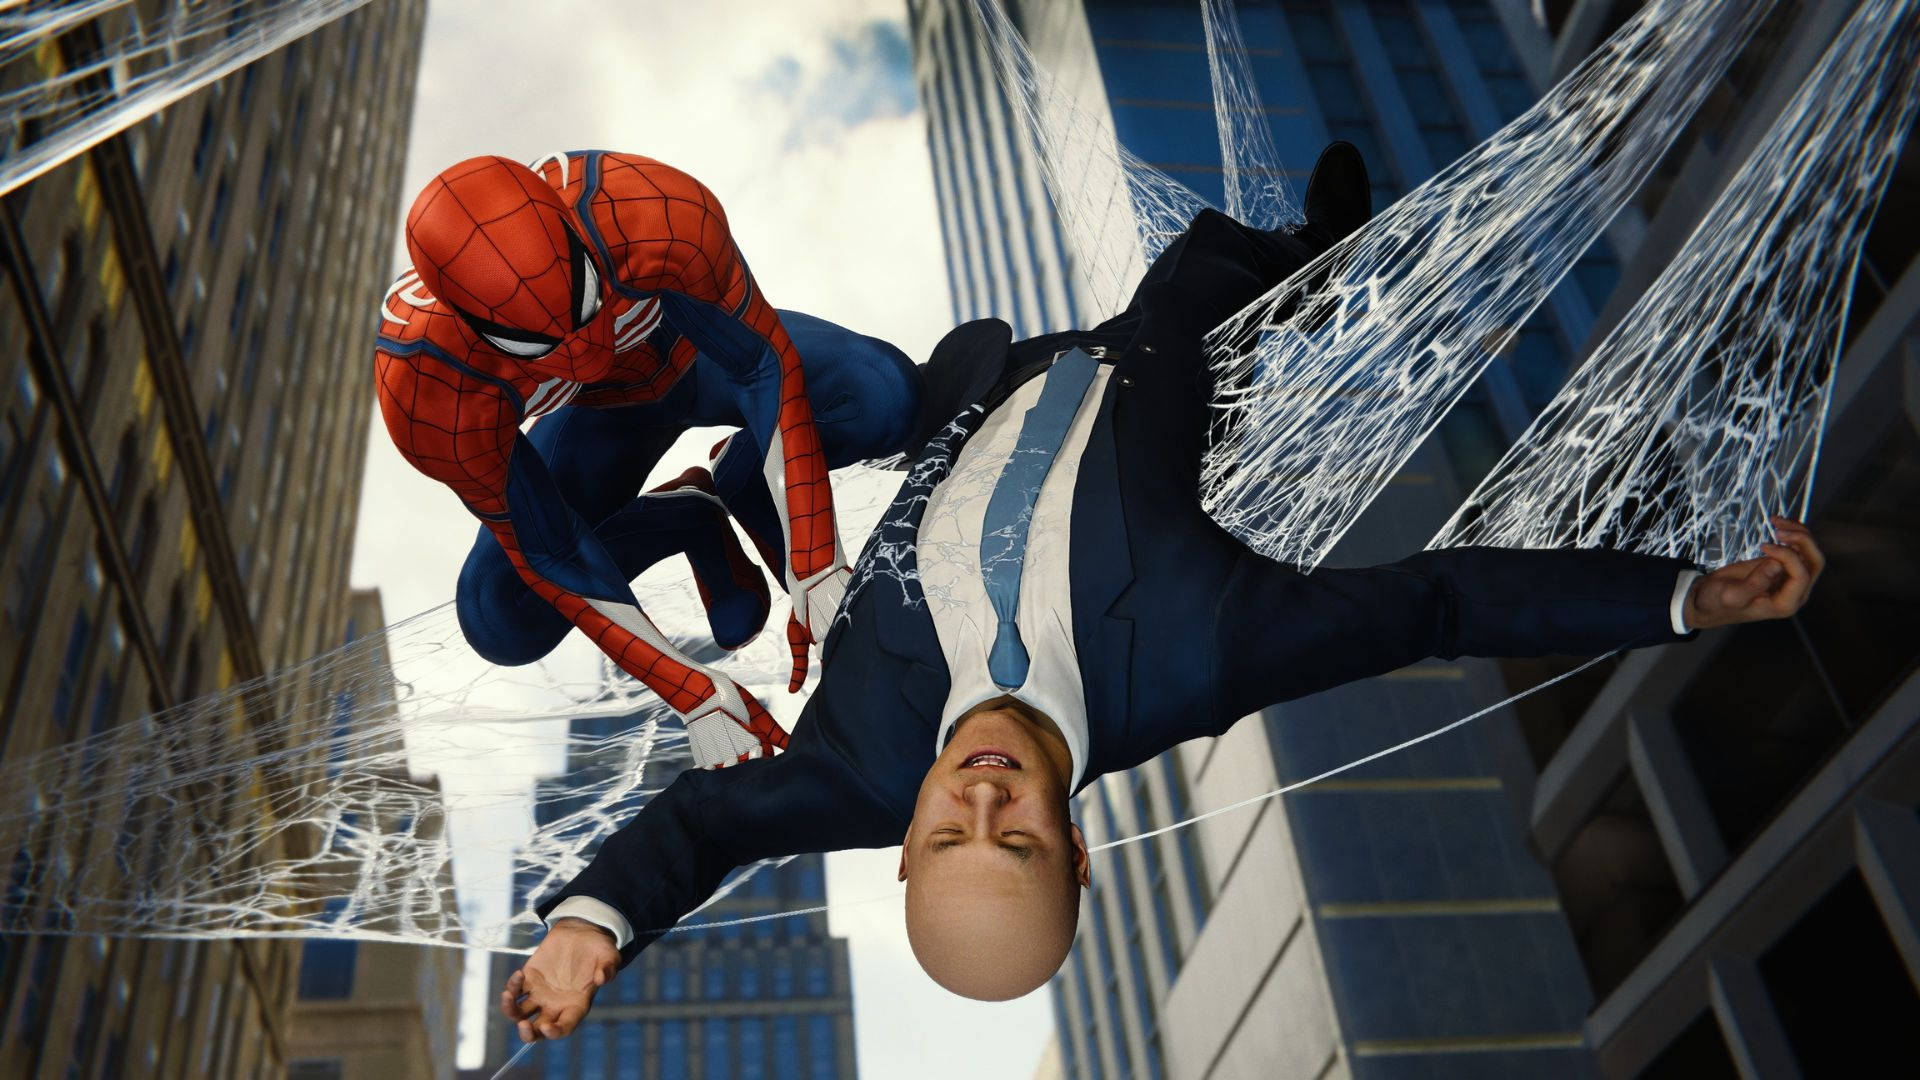 4k Spiderman Saving A Man Background